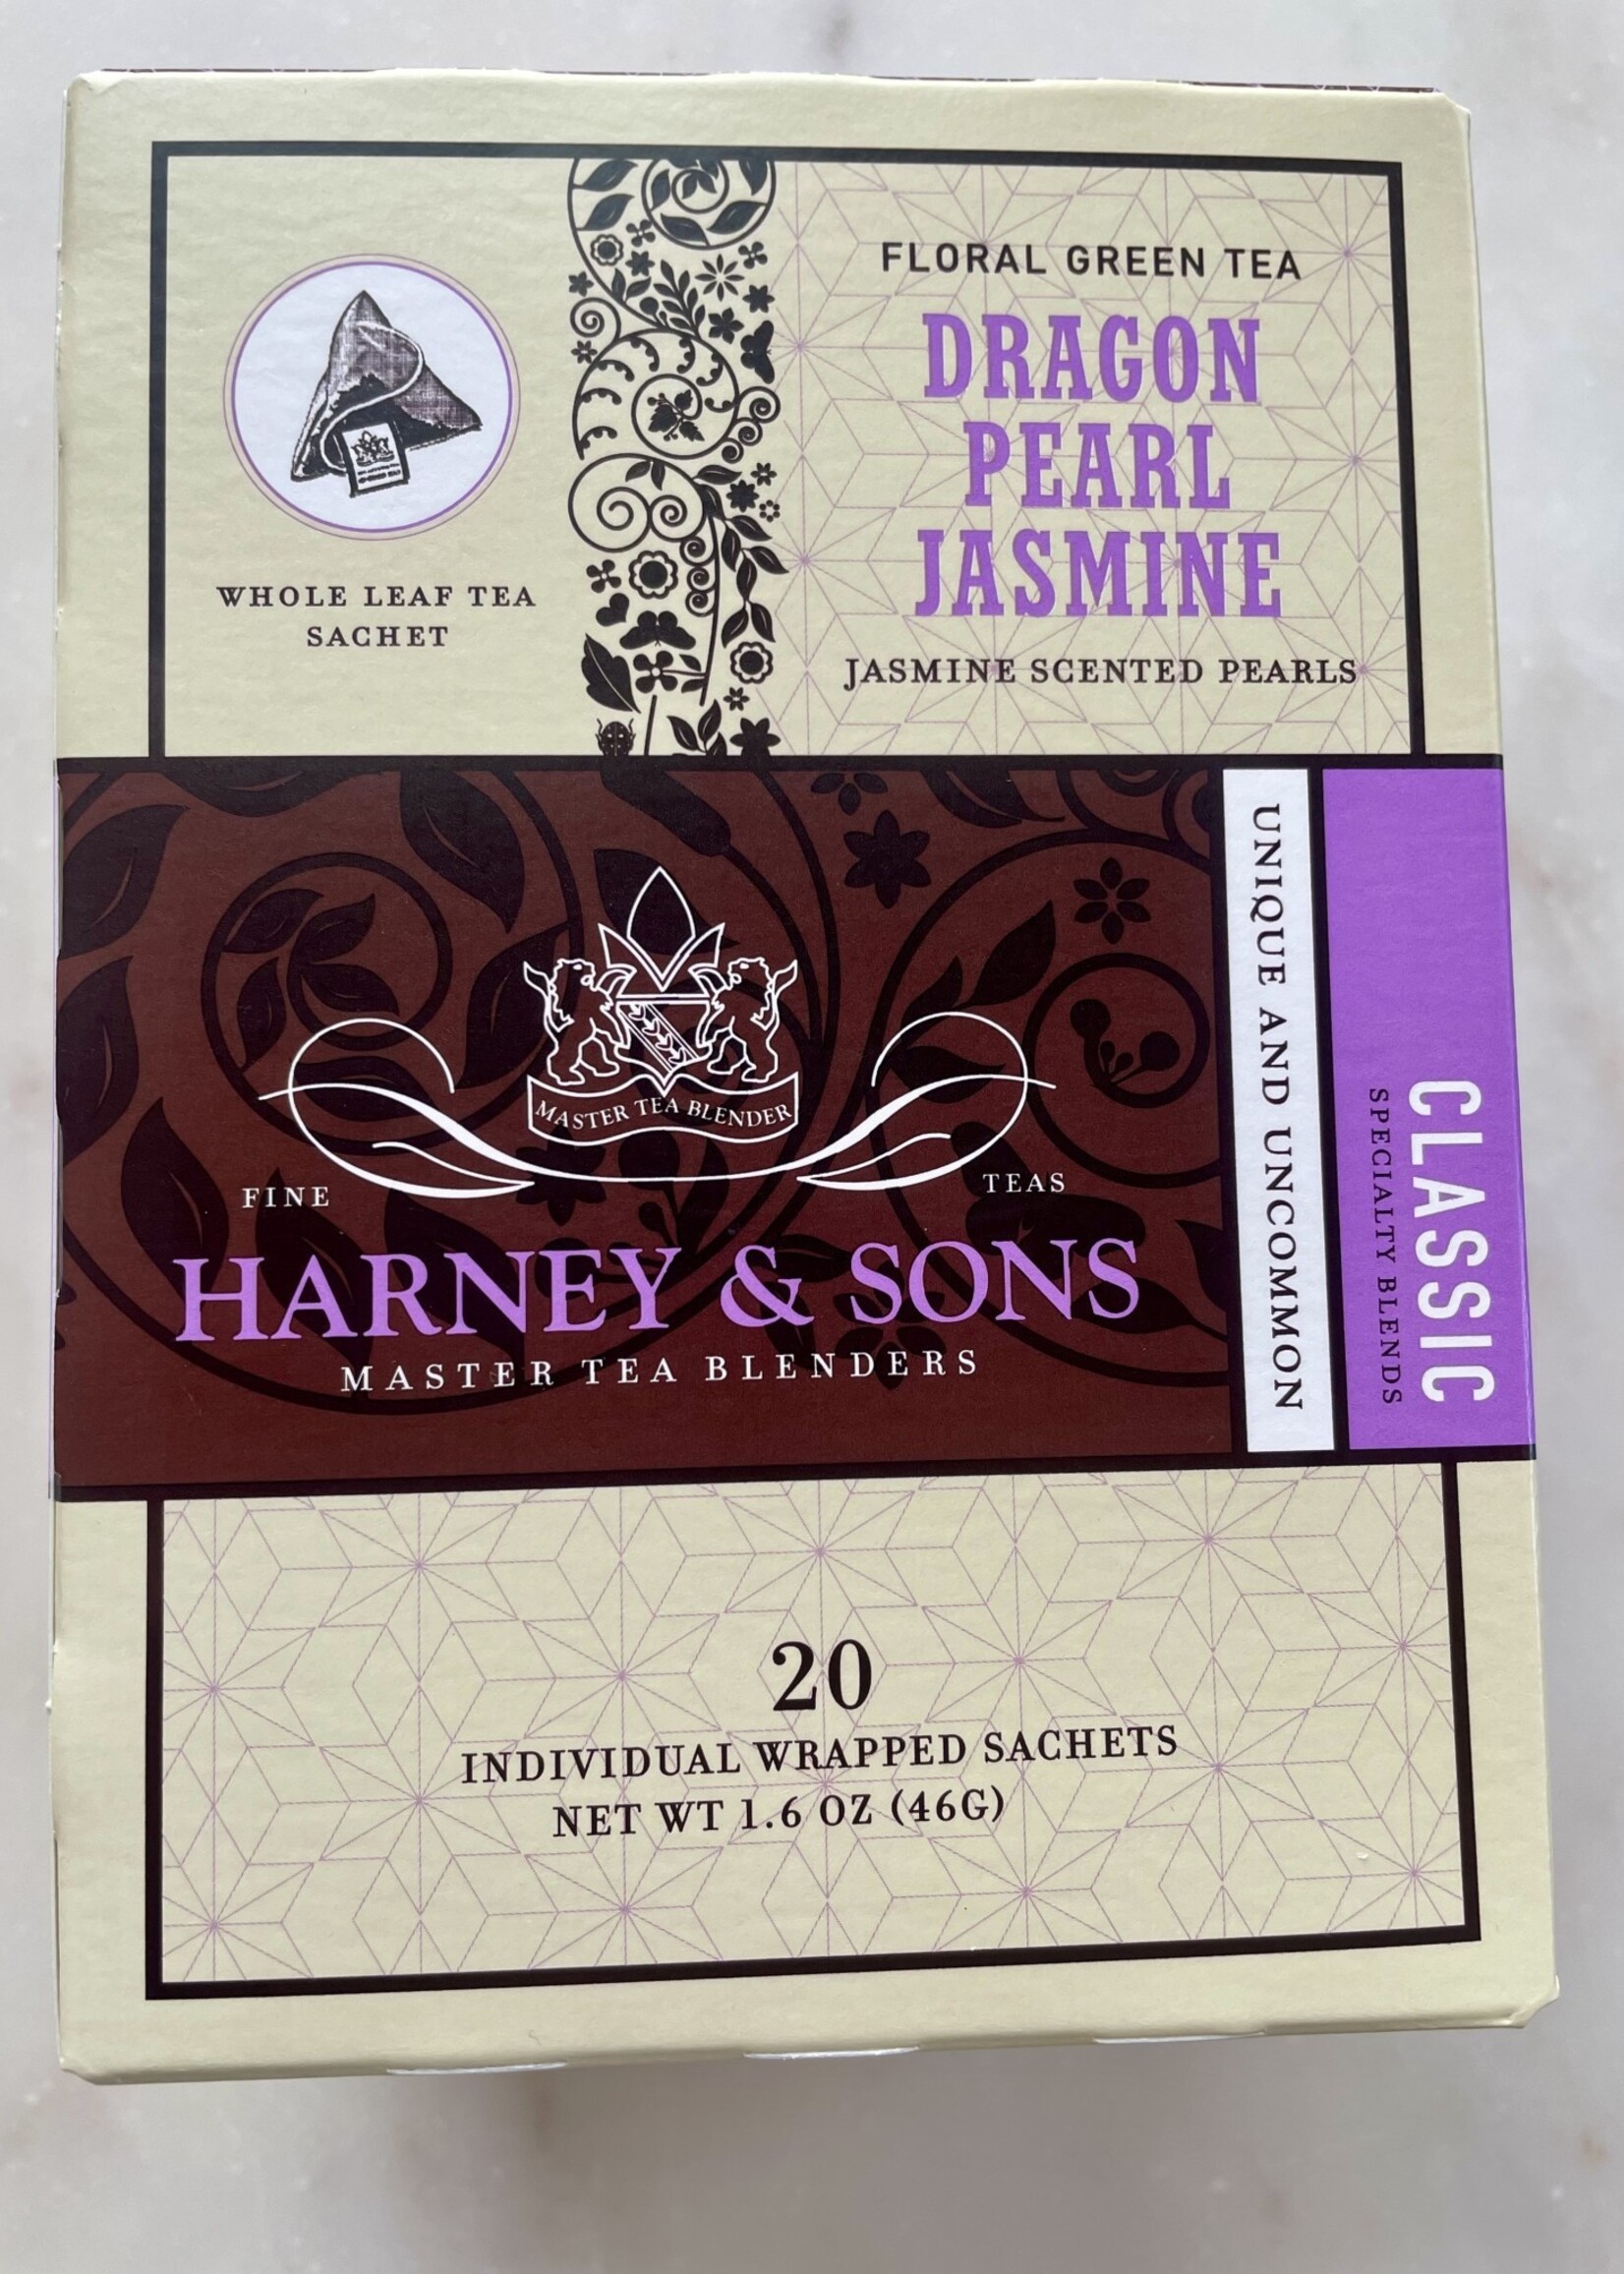 Harney & Sons, Dragon Pearl Jasmine Tea Whole Leaf Sachet (Box of 20 individuals wrapped sachets) 1oz (28.8g)